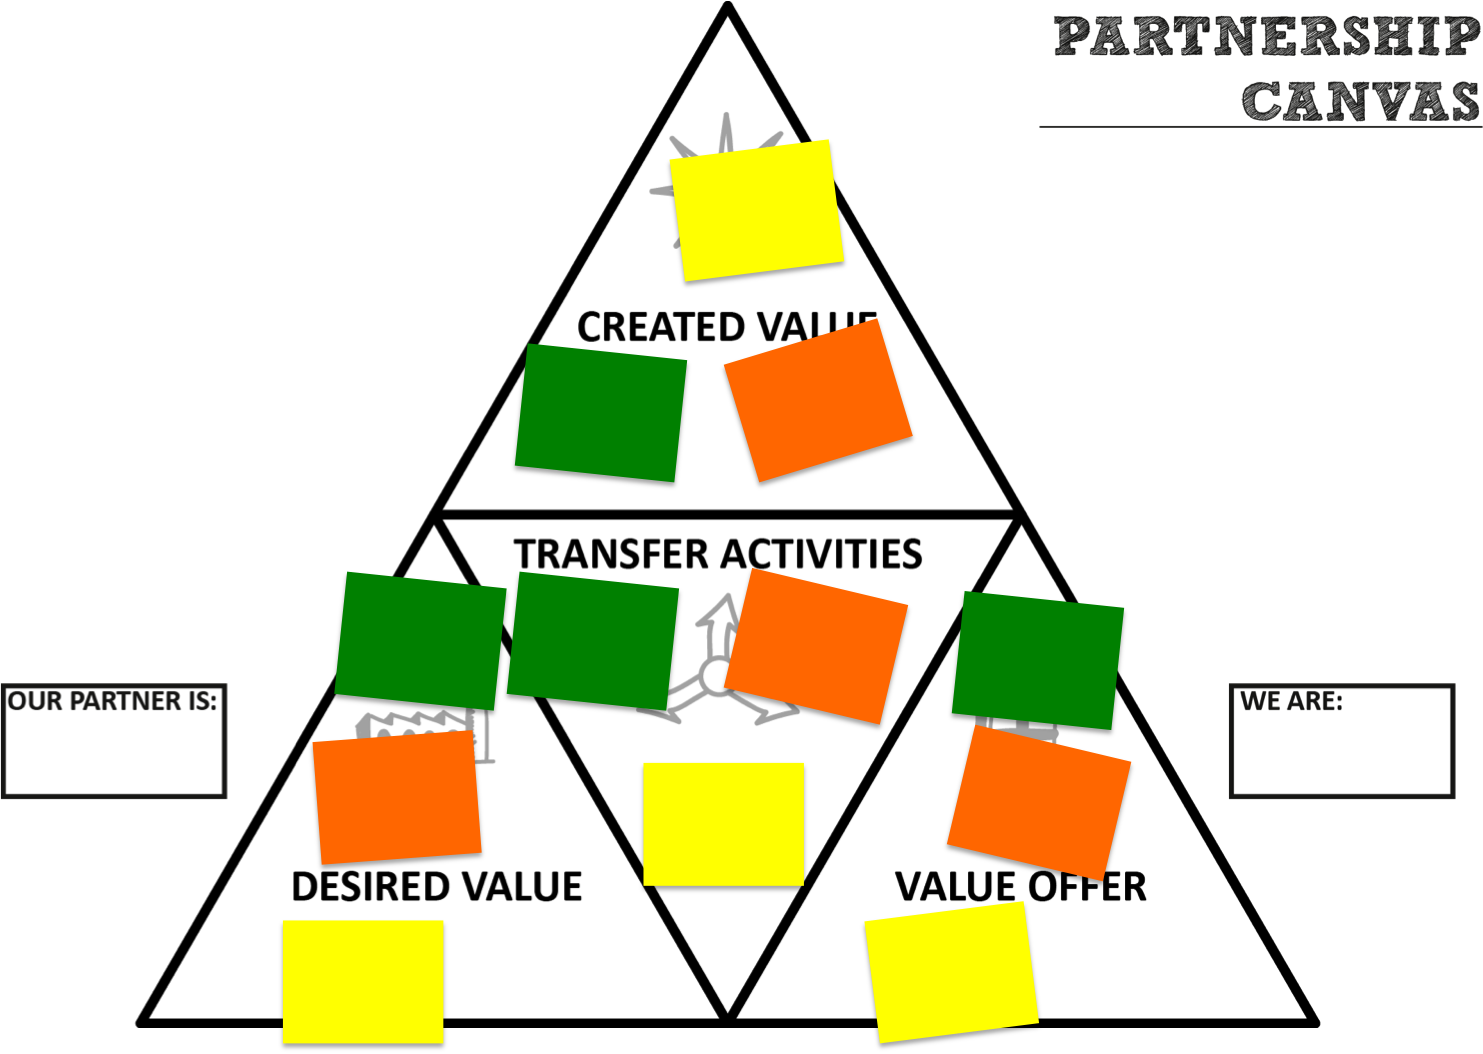 Spiksplinternieuw The Partnership Canvas | Value Chain Generation QD-96